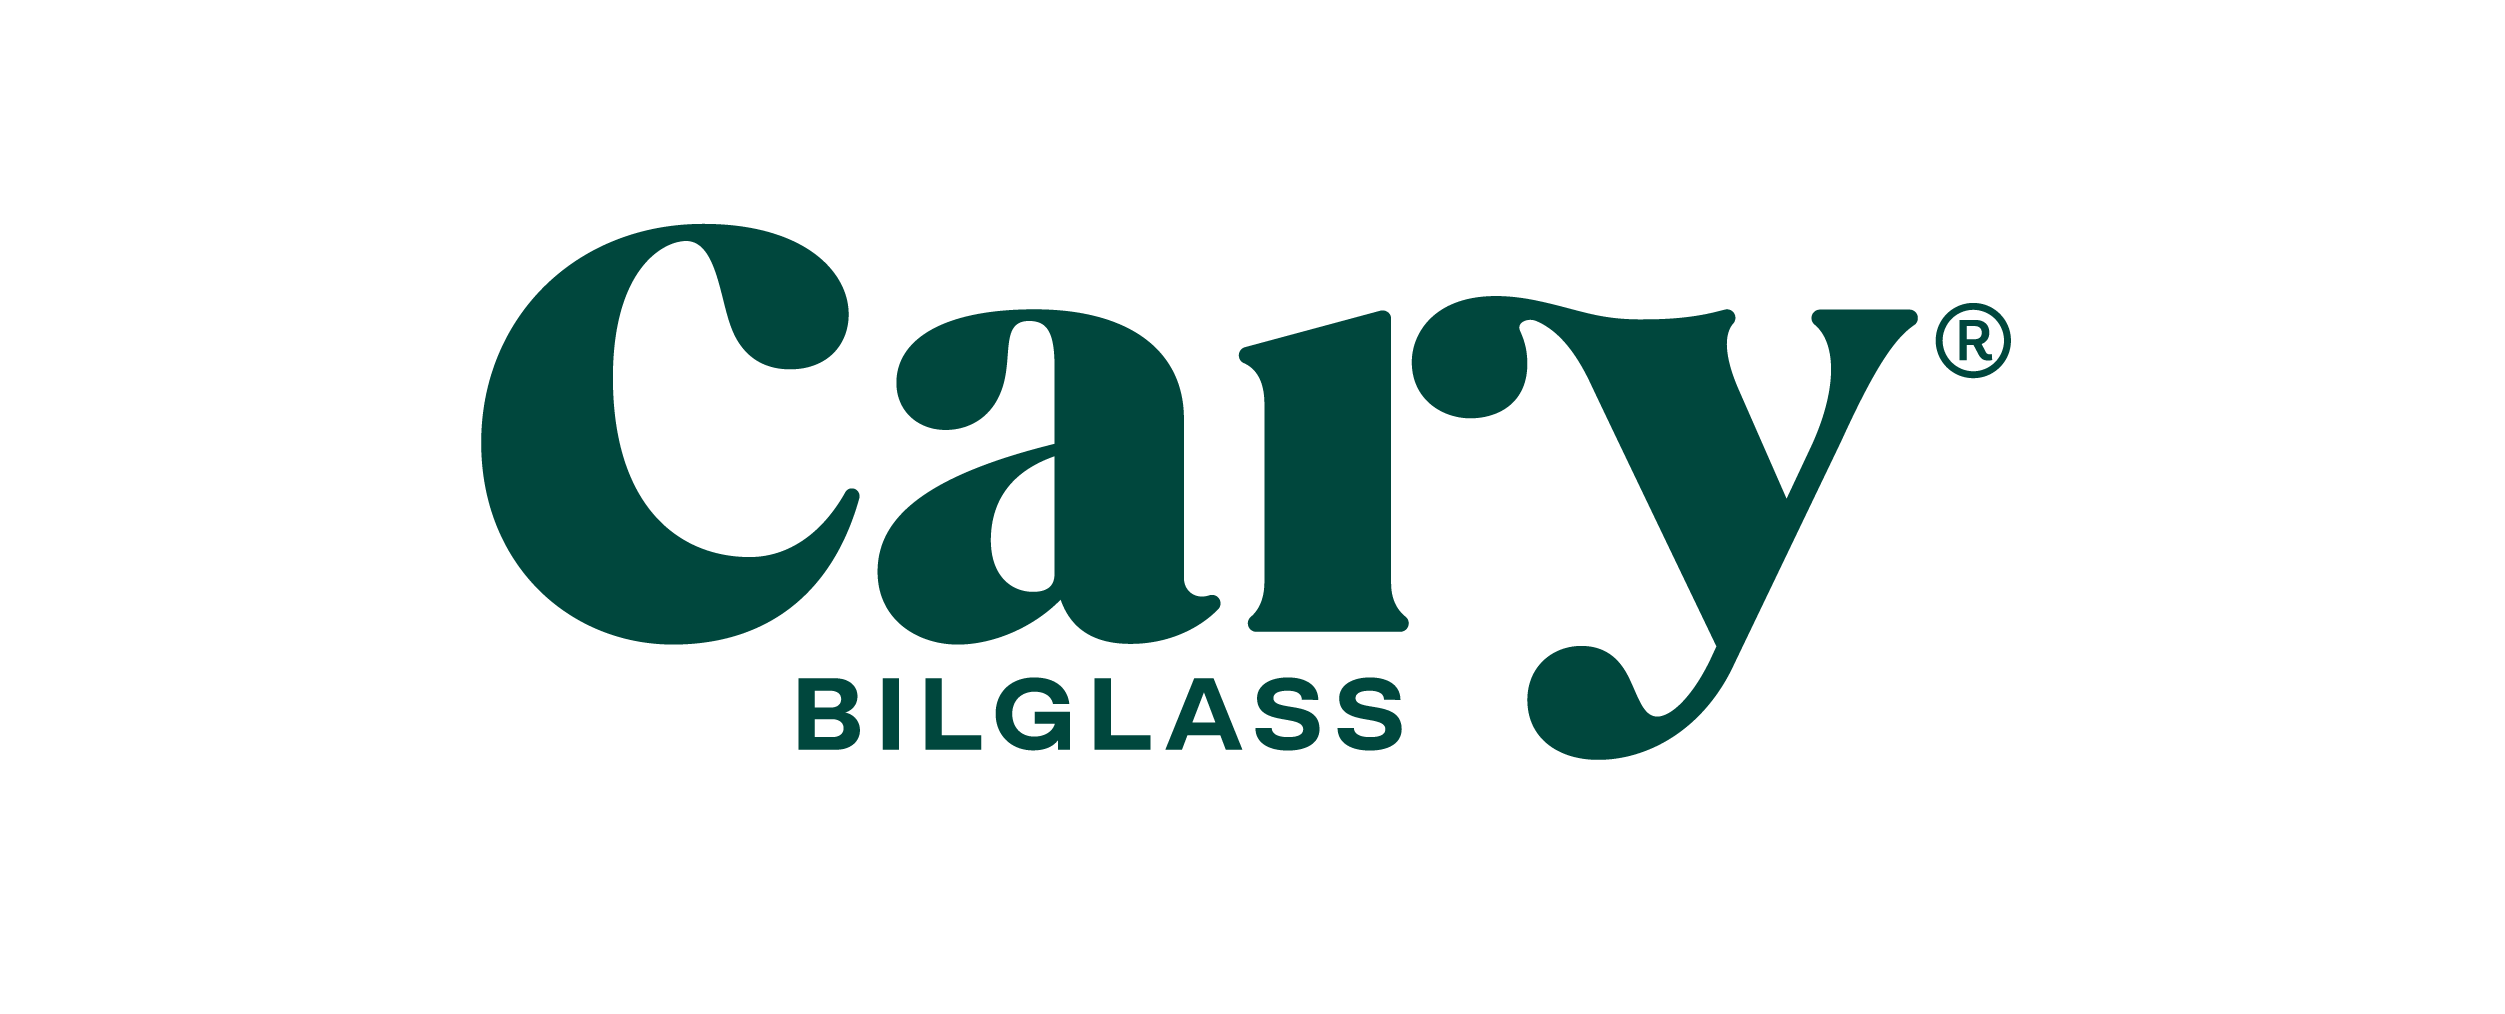 Cary Bilglass